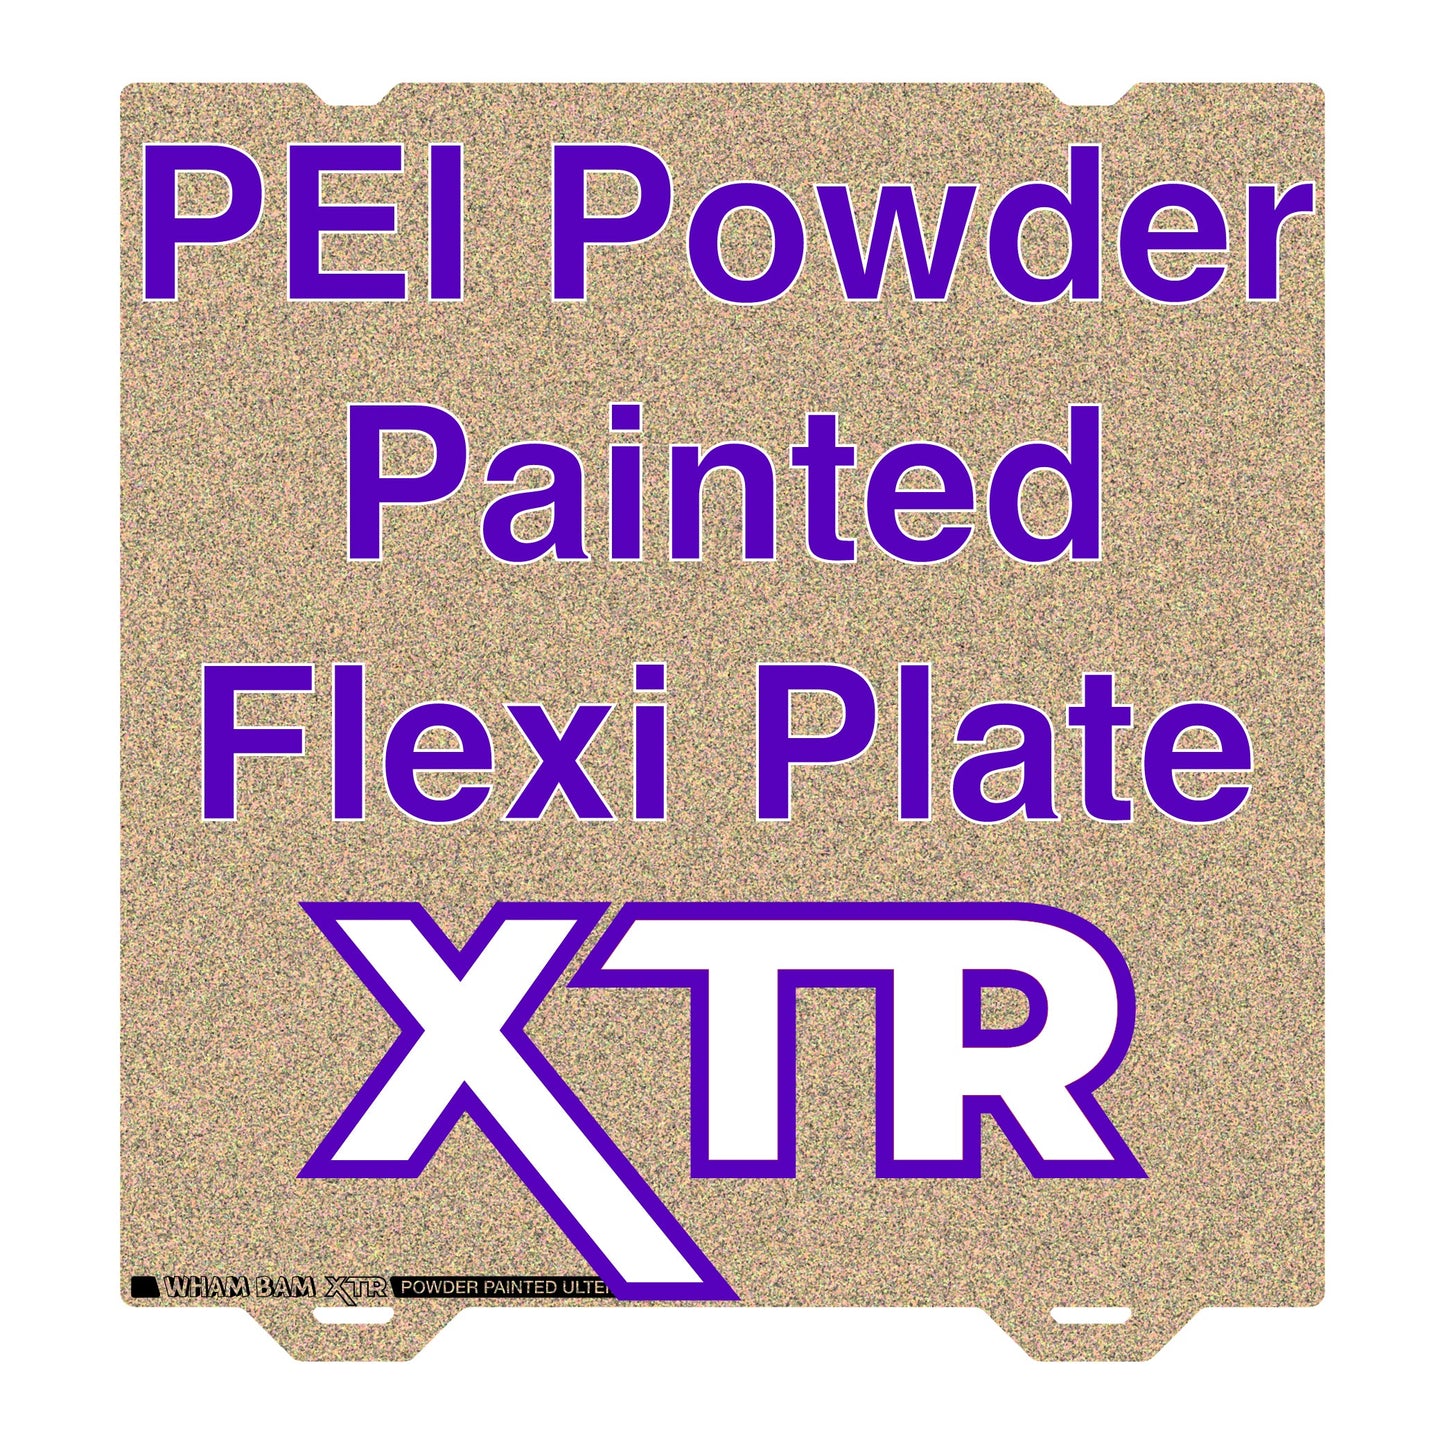 XTR Powder Painted PEI Flexi Plate - 315 x 310 - Creality K1 Max, Ender 3 S1 Plus, CR10 Smart Pro